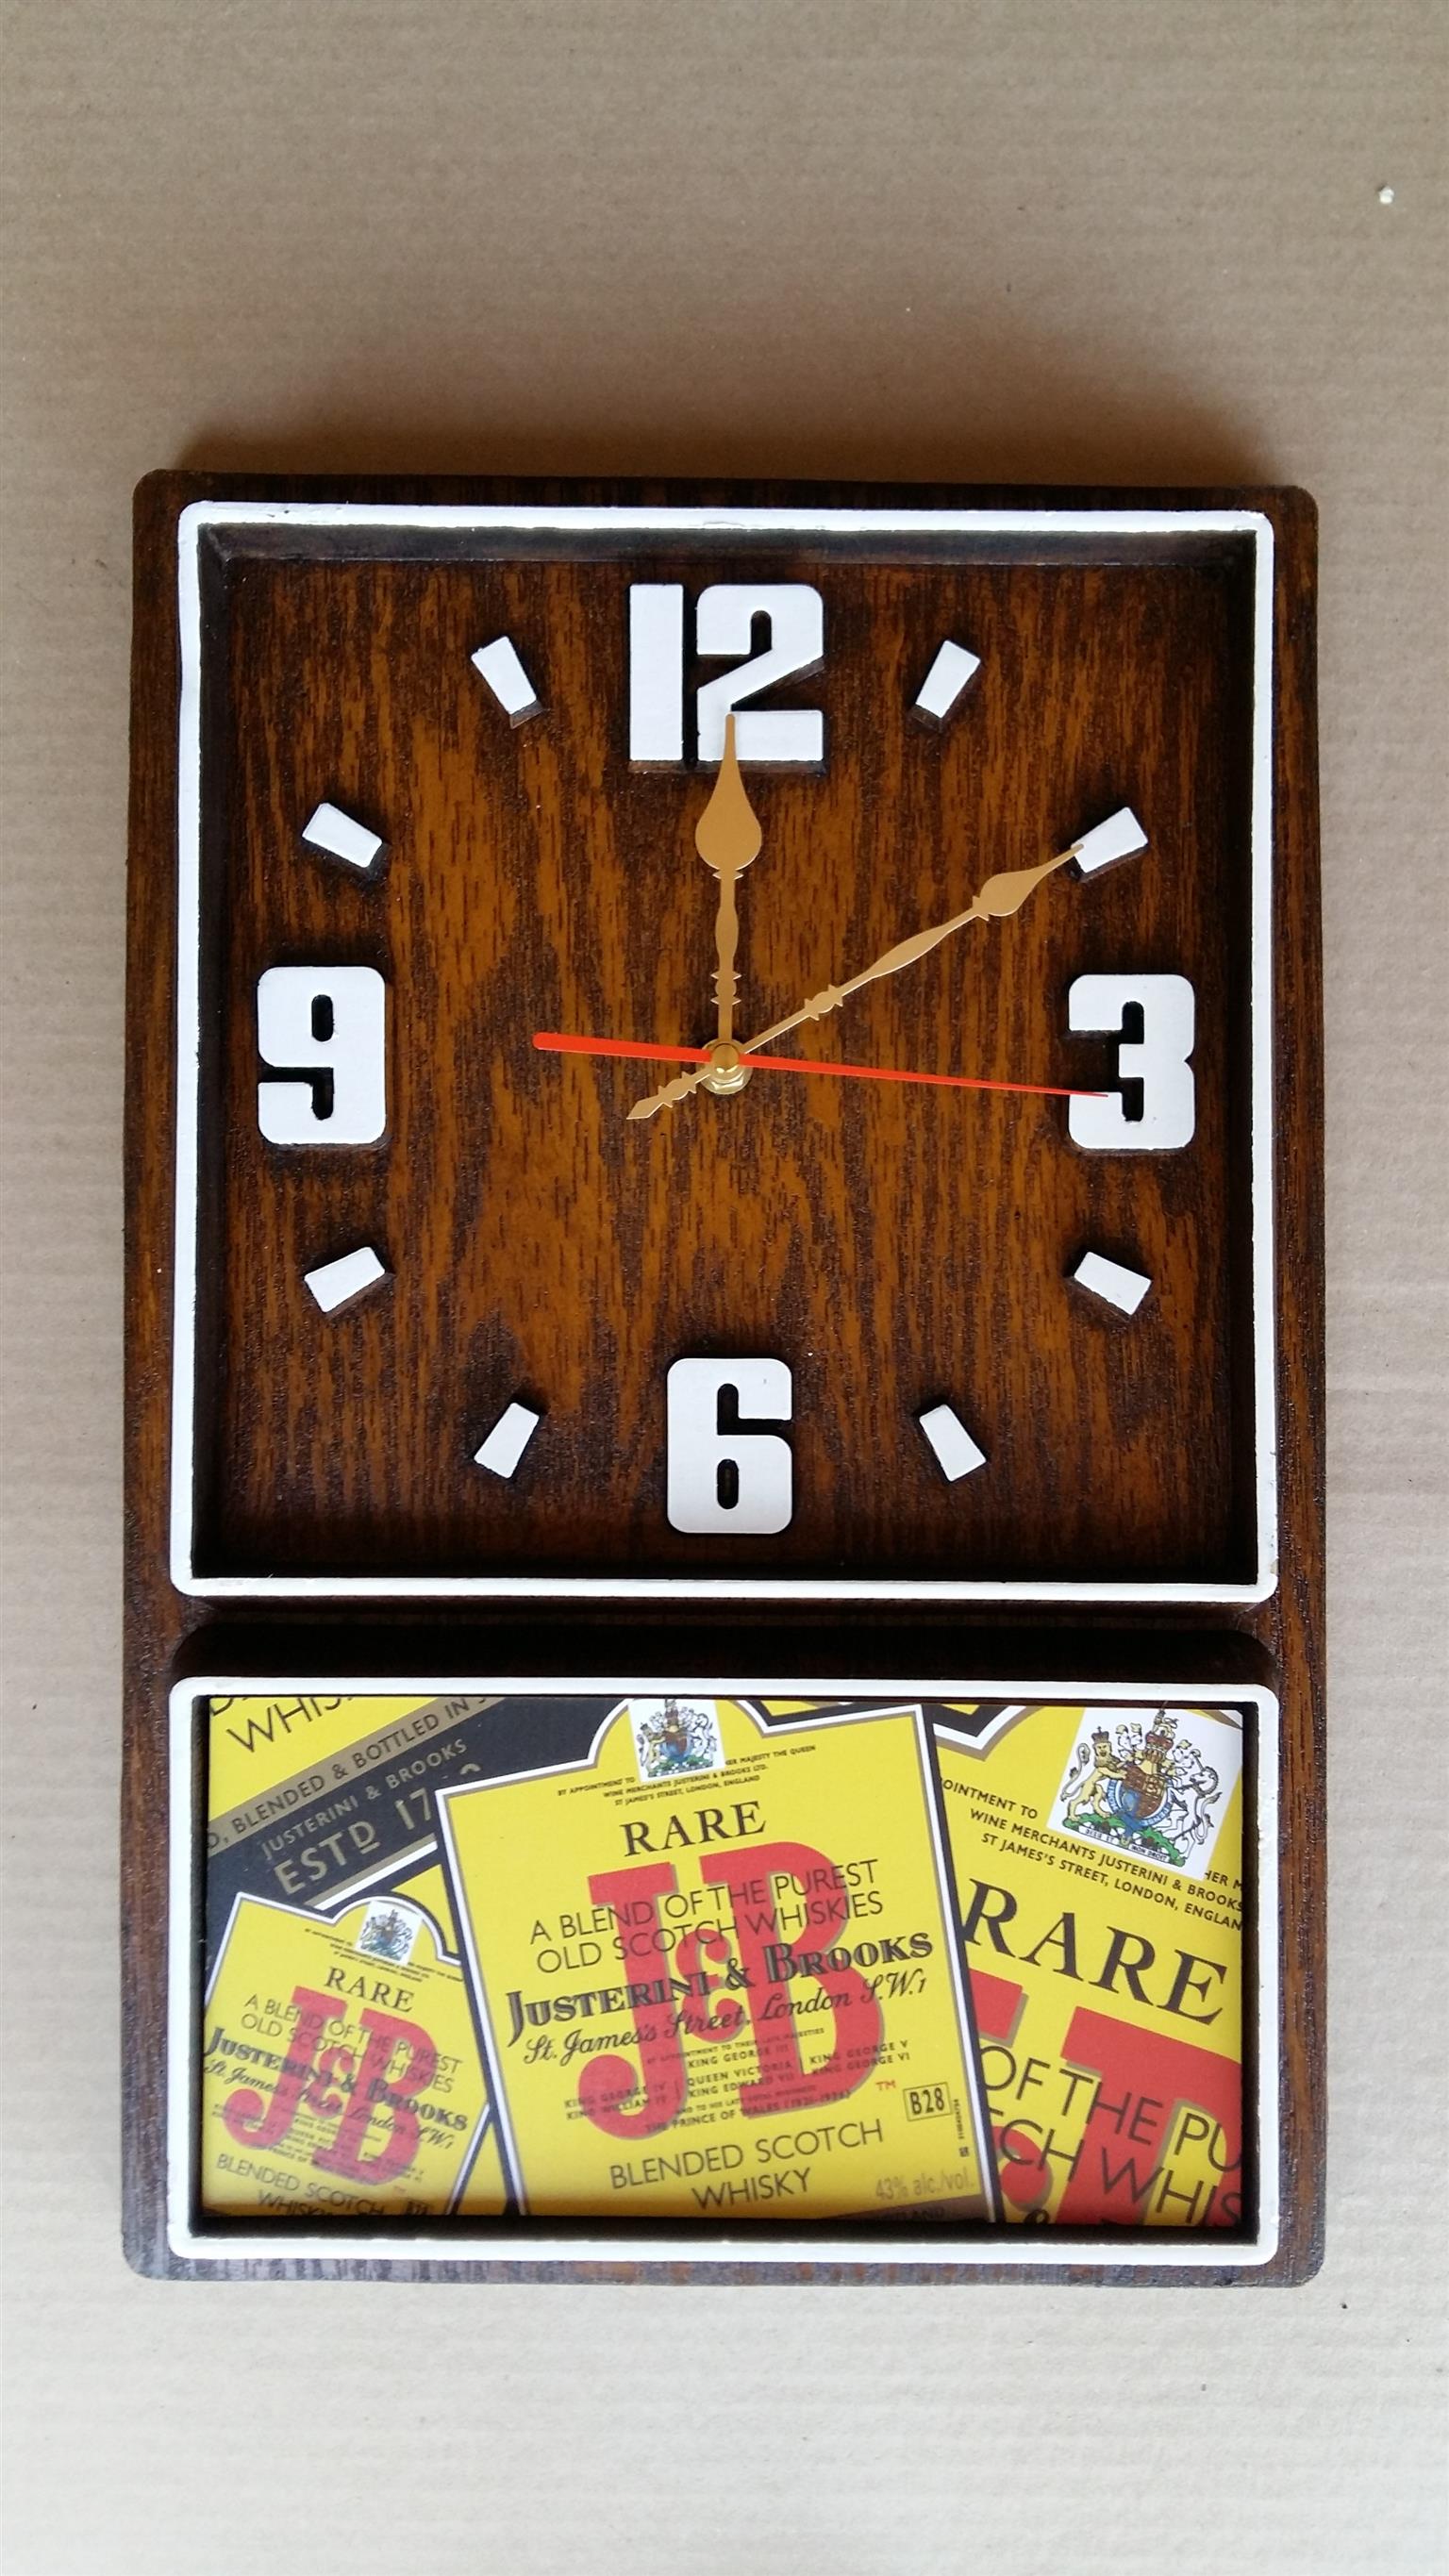 J & B Scotch Whisky Box Clock. Design 2. Brand New Product.